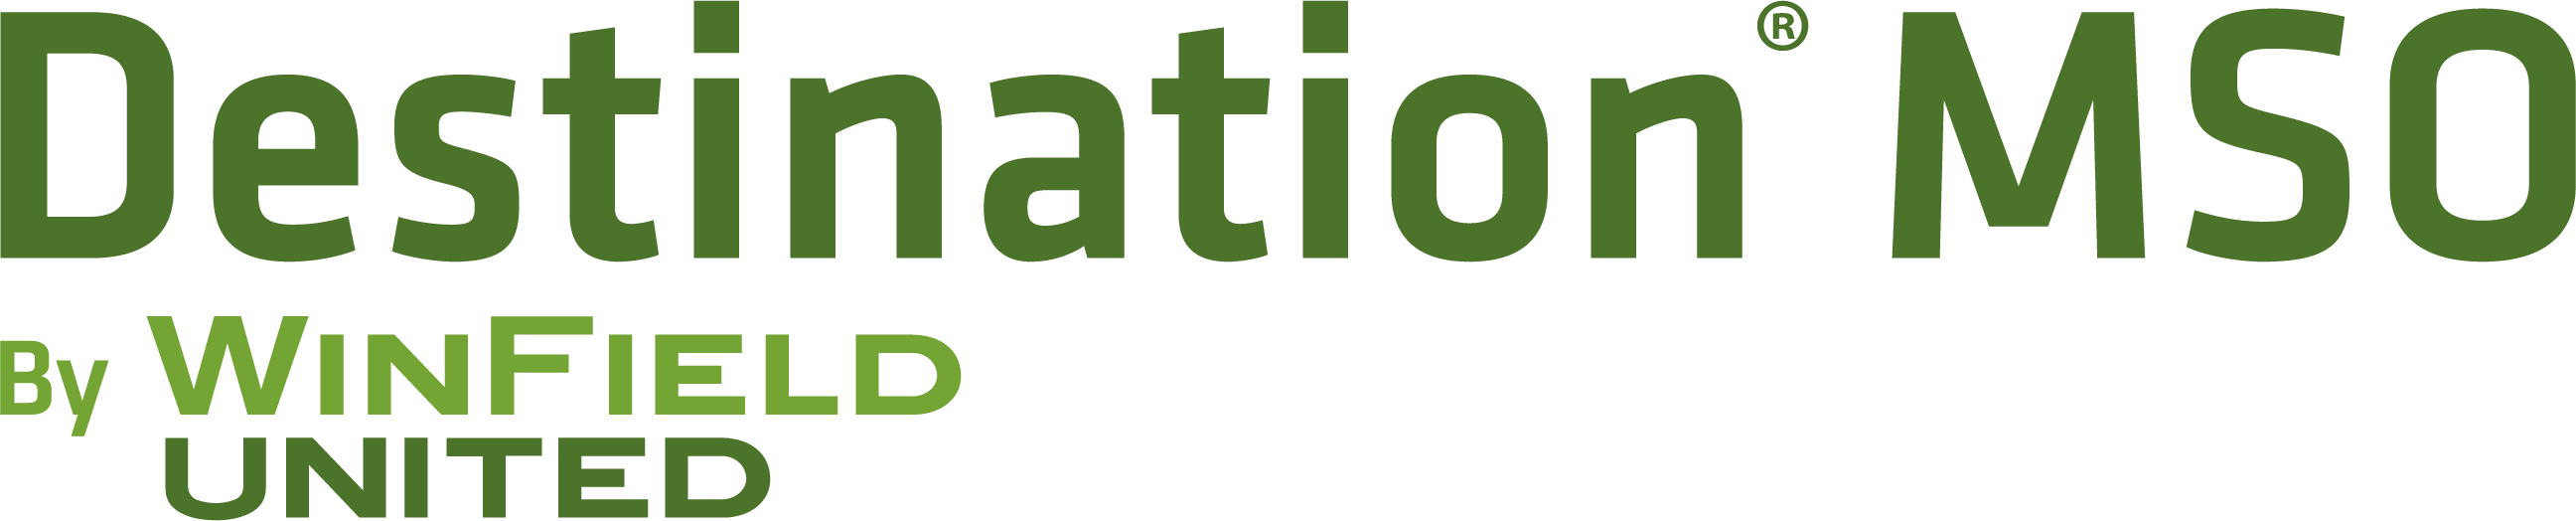 destination mso logo